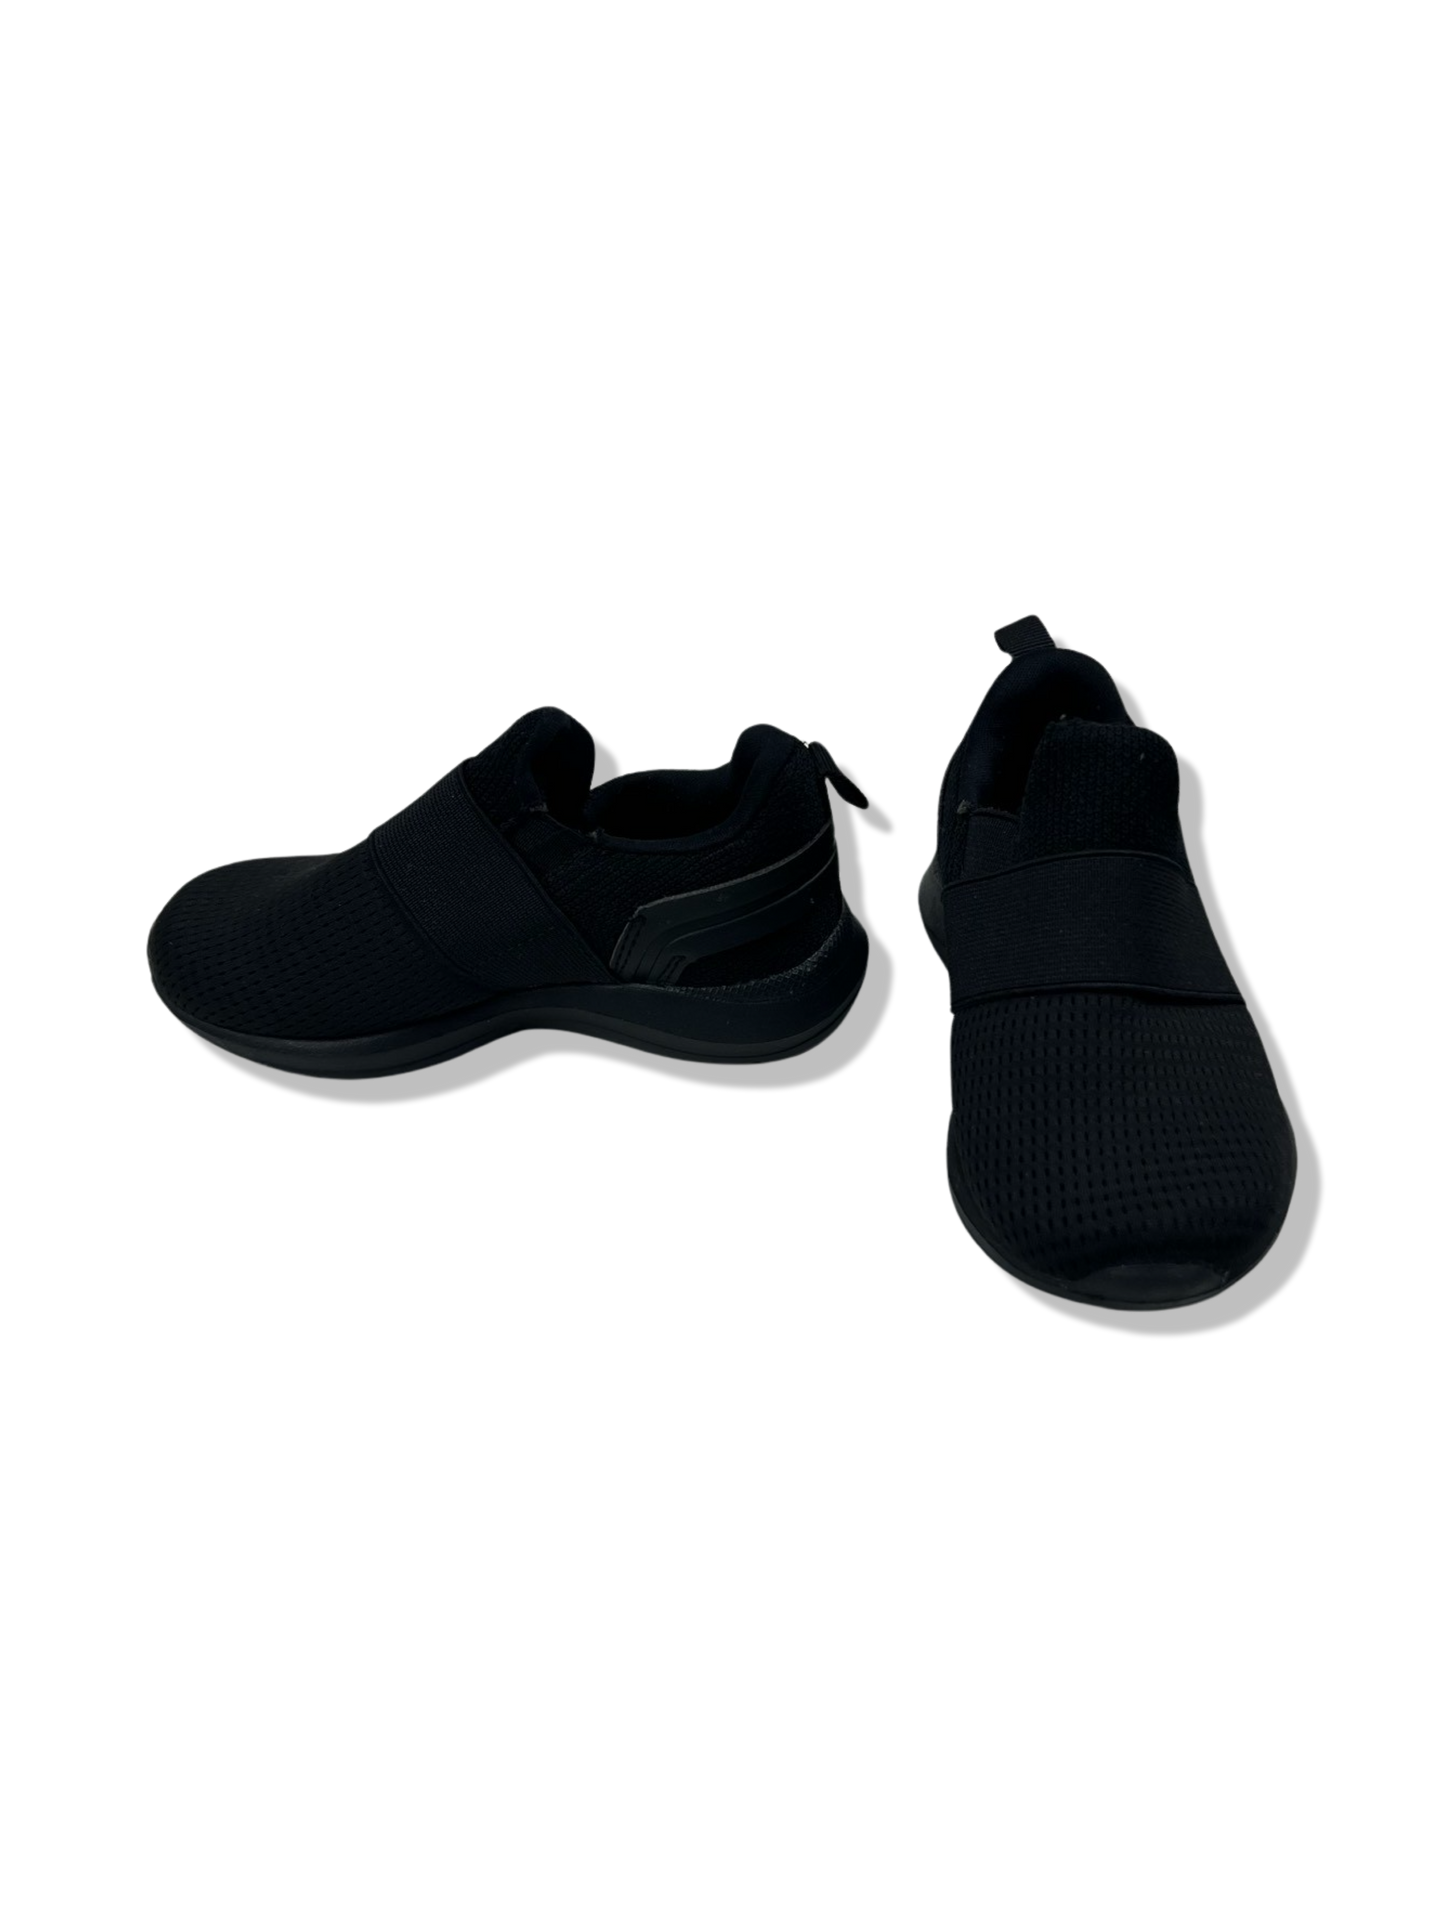 Anko Black Sneakers - Size 8